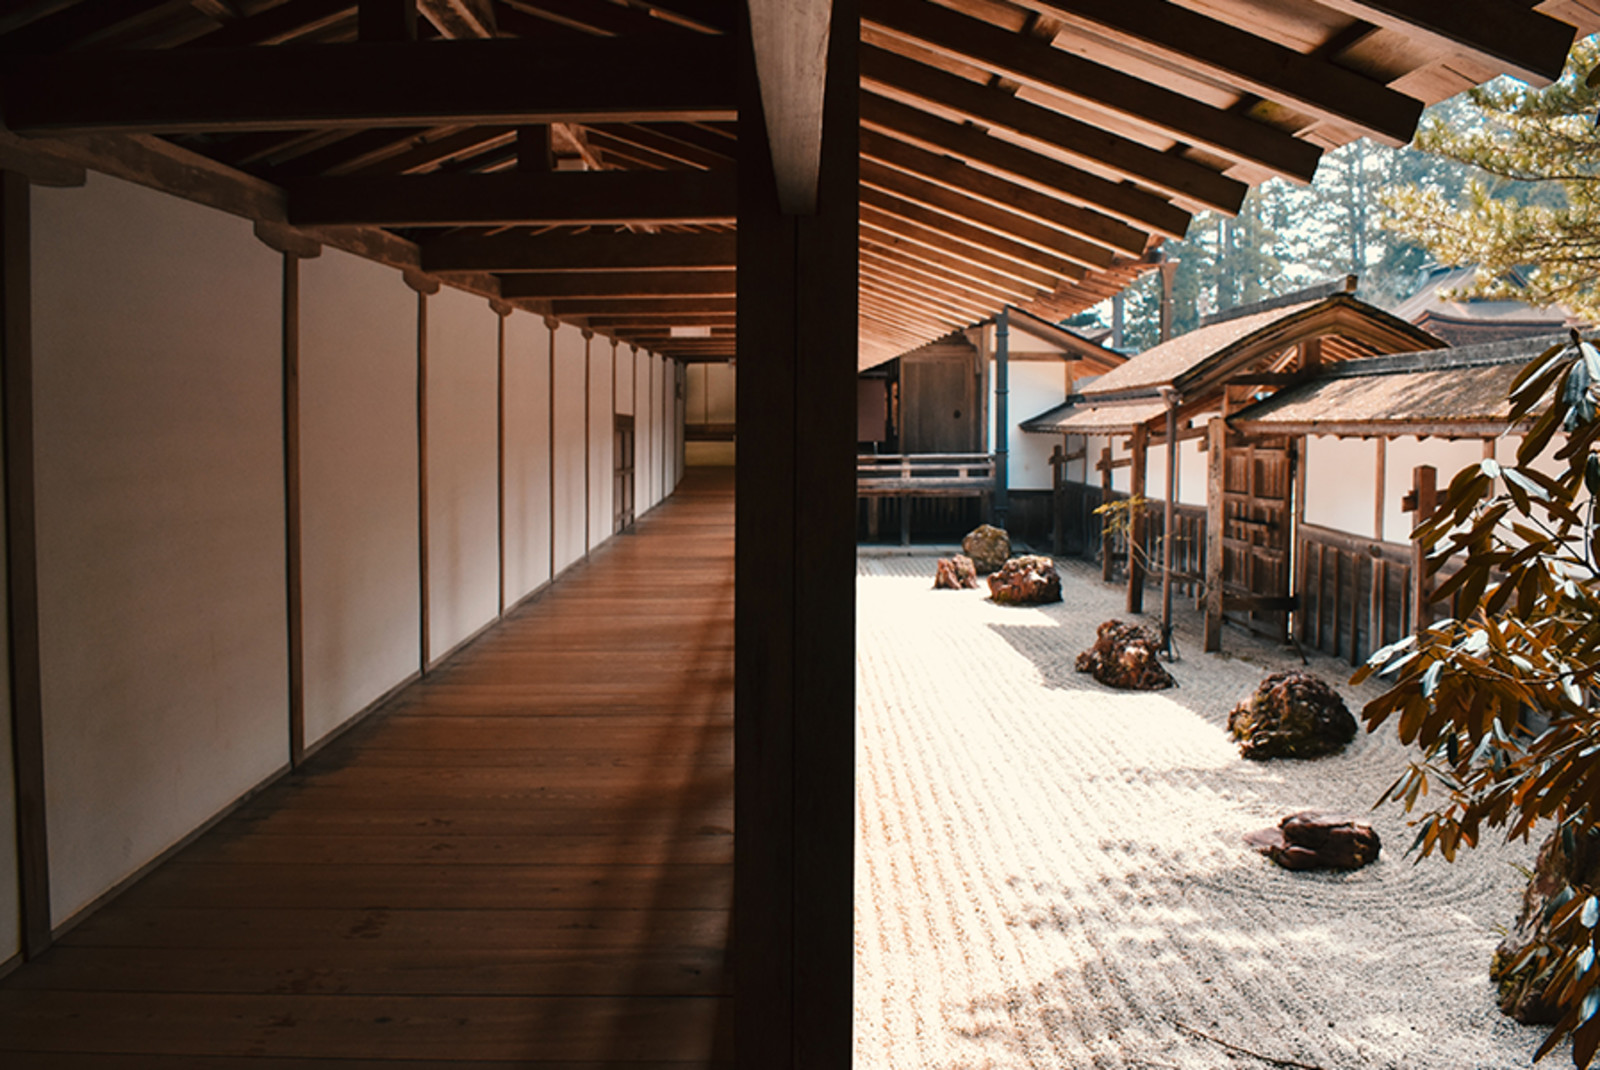 Japanese zen garden with white walls and wooden floors